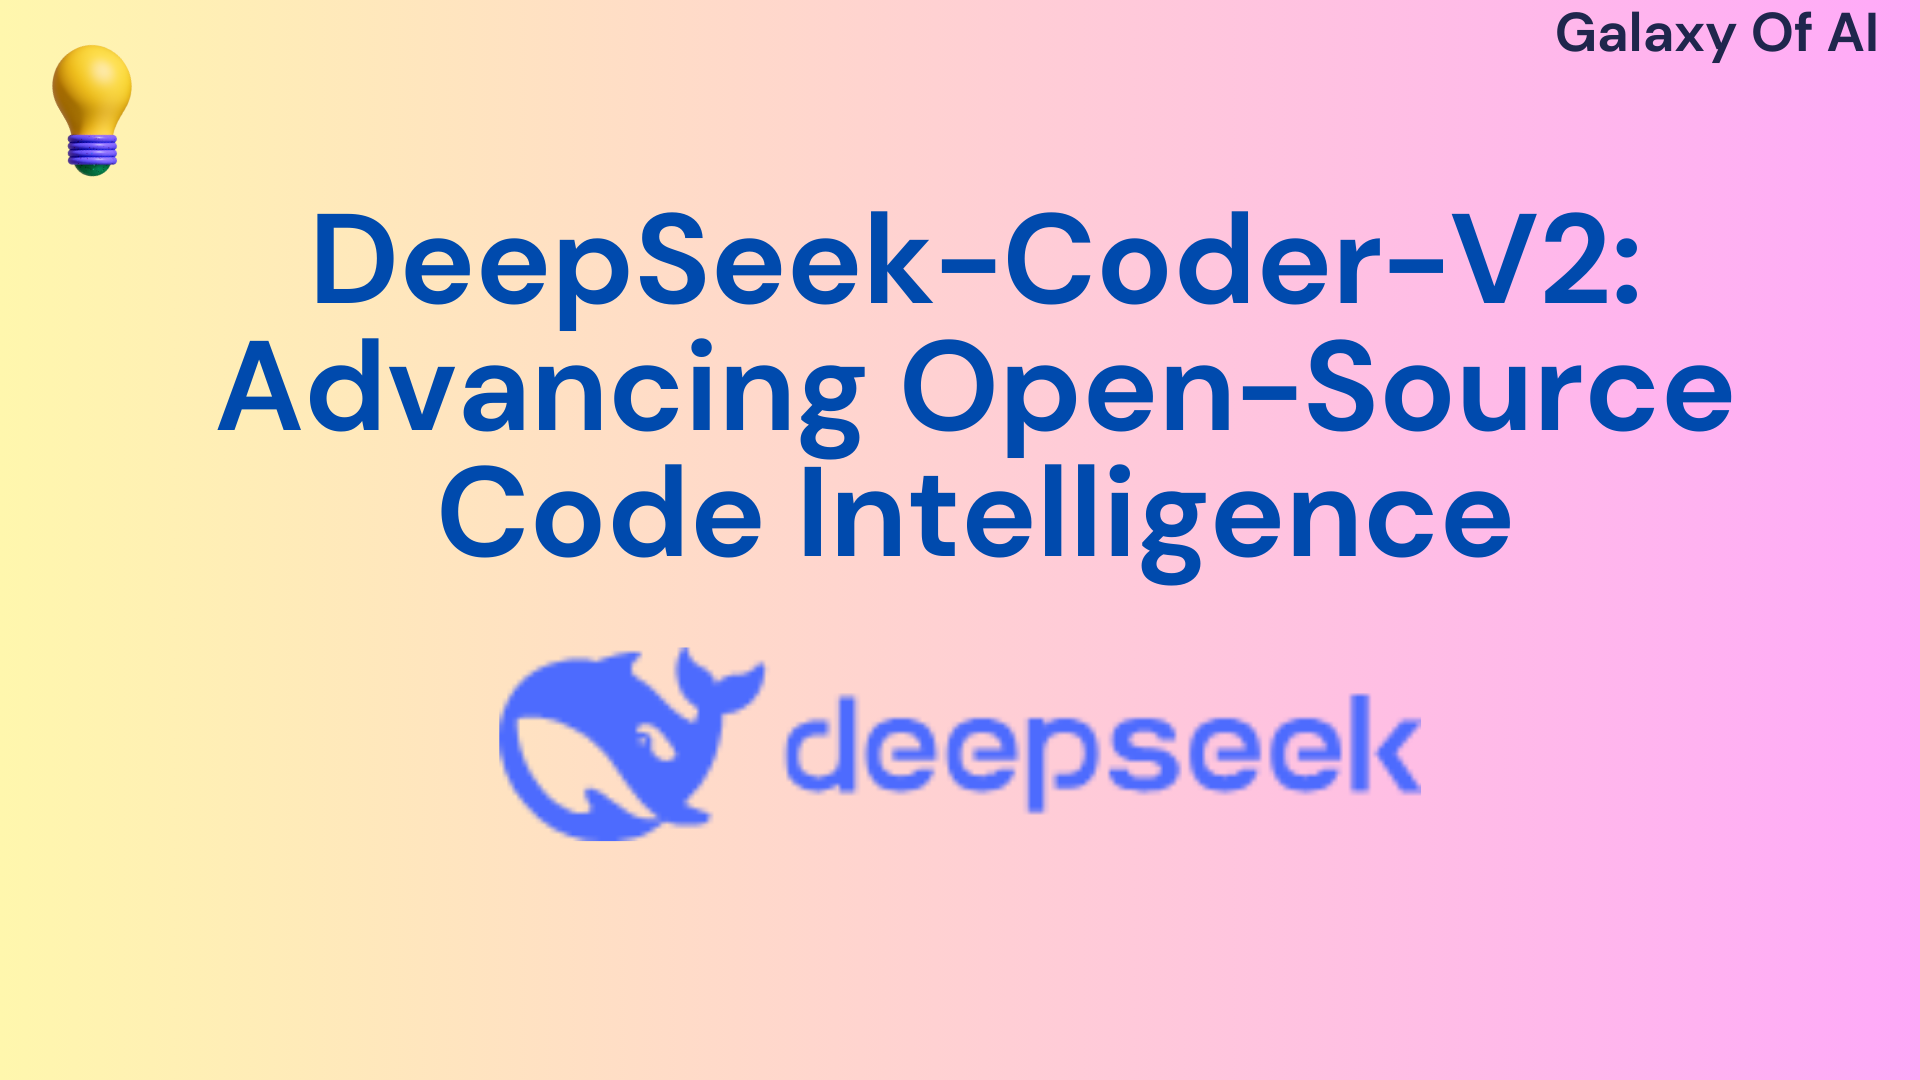 DeepSeek-Coder-V2: Advancing Open-Source Code Intelligence